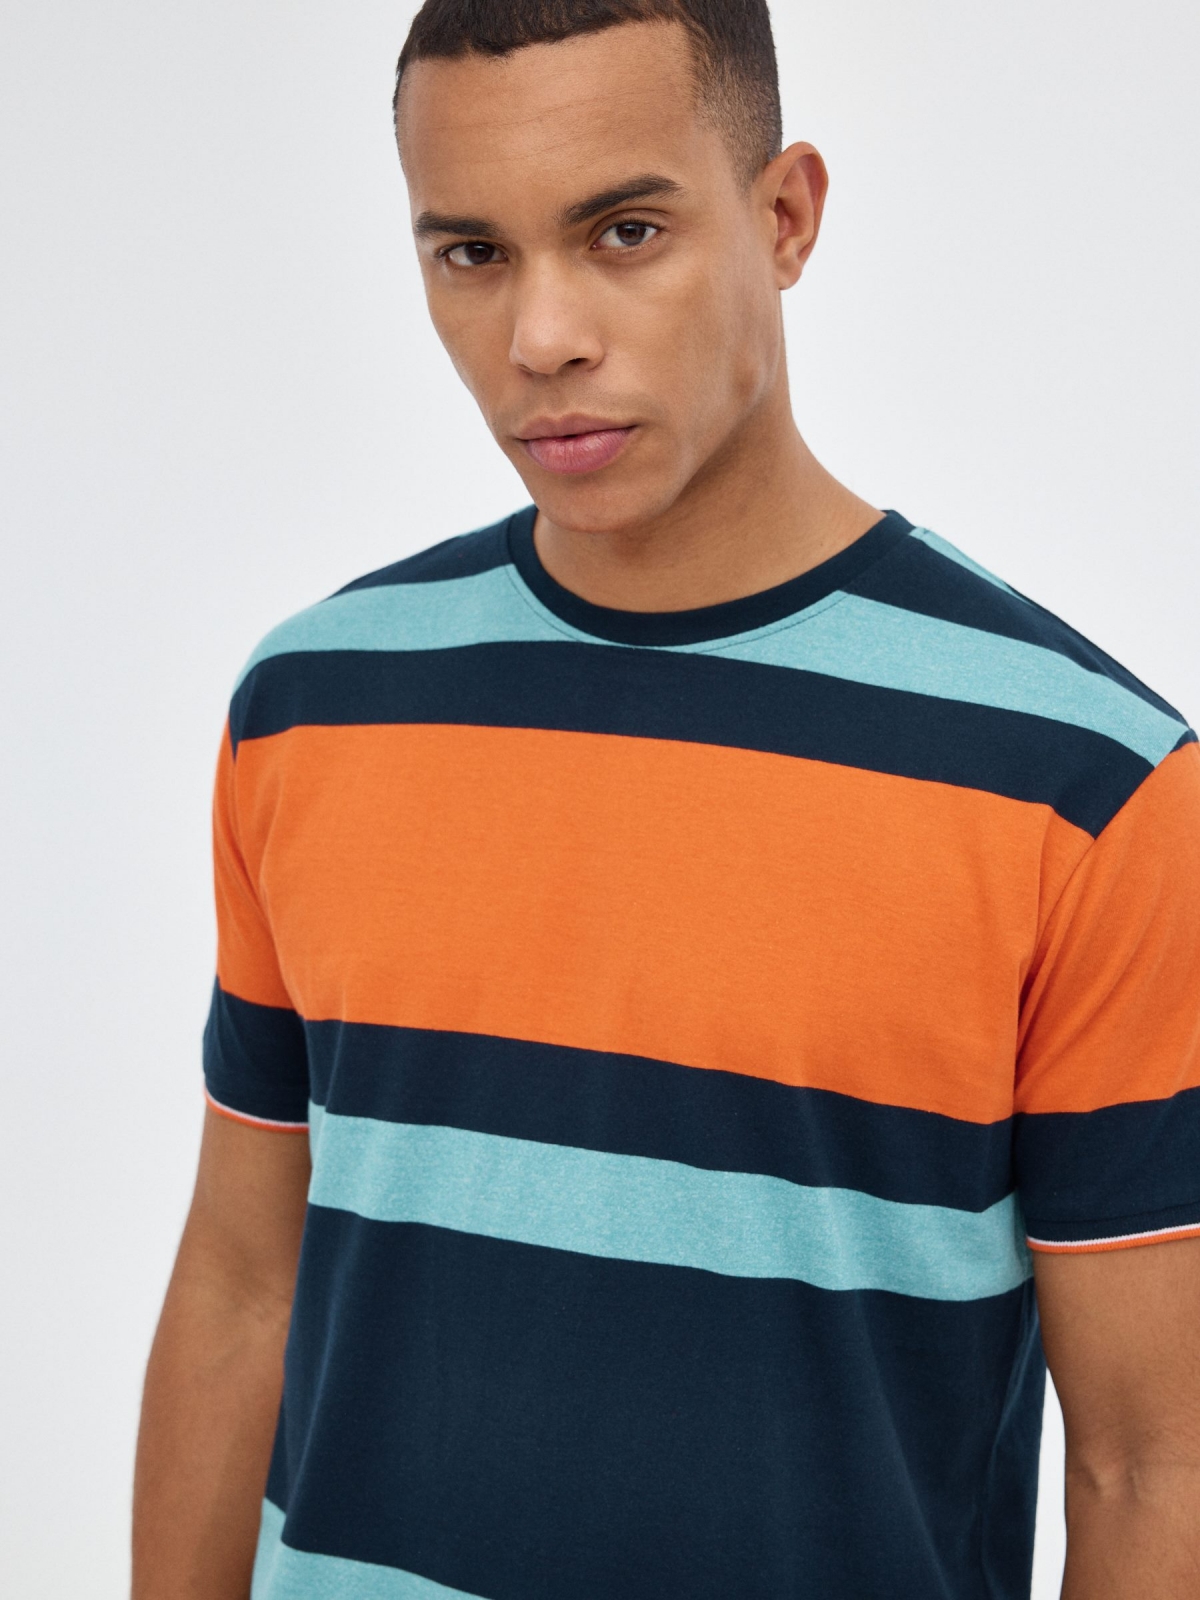 Camiseta rayas azul y naranja azul vista detalle